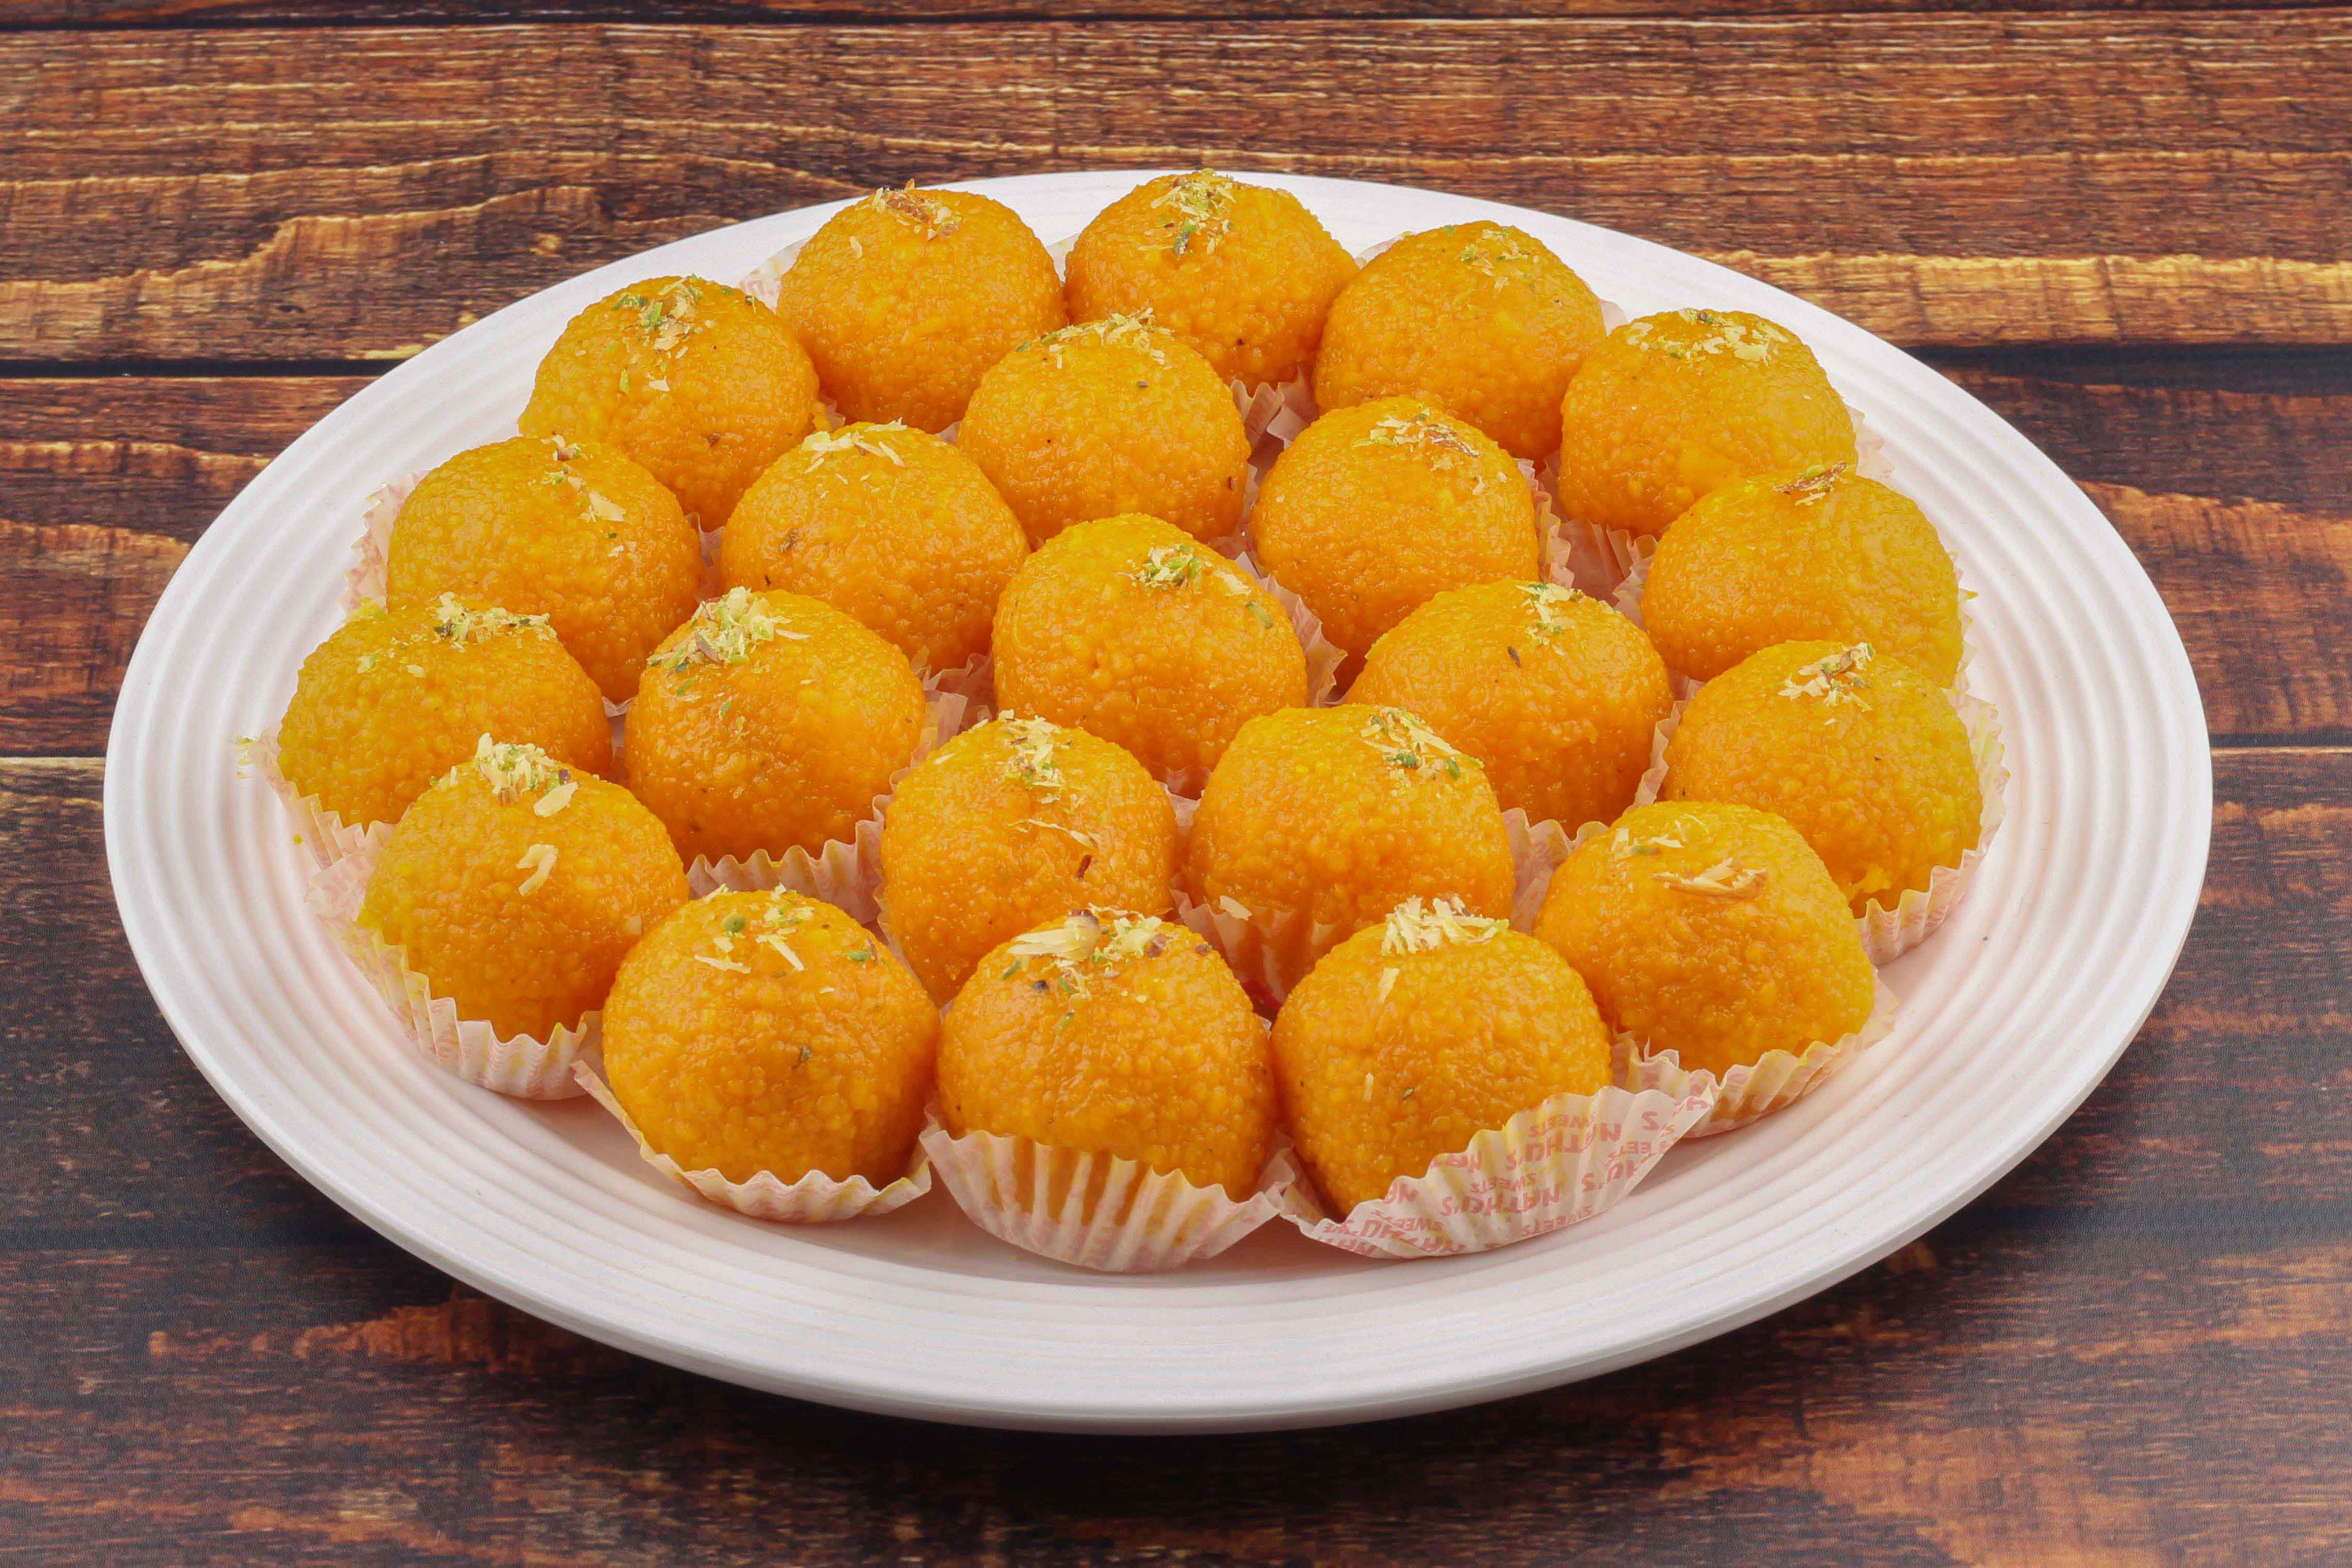 Easy To Make Mithai At Home For Raksha Bandhan  Special Sweets Recipes इस  रकषबधन घर पर बनए य मठईय रशत म बन रहग मठस